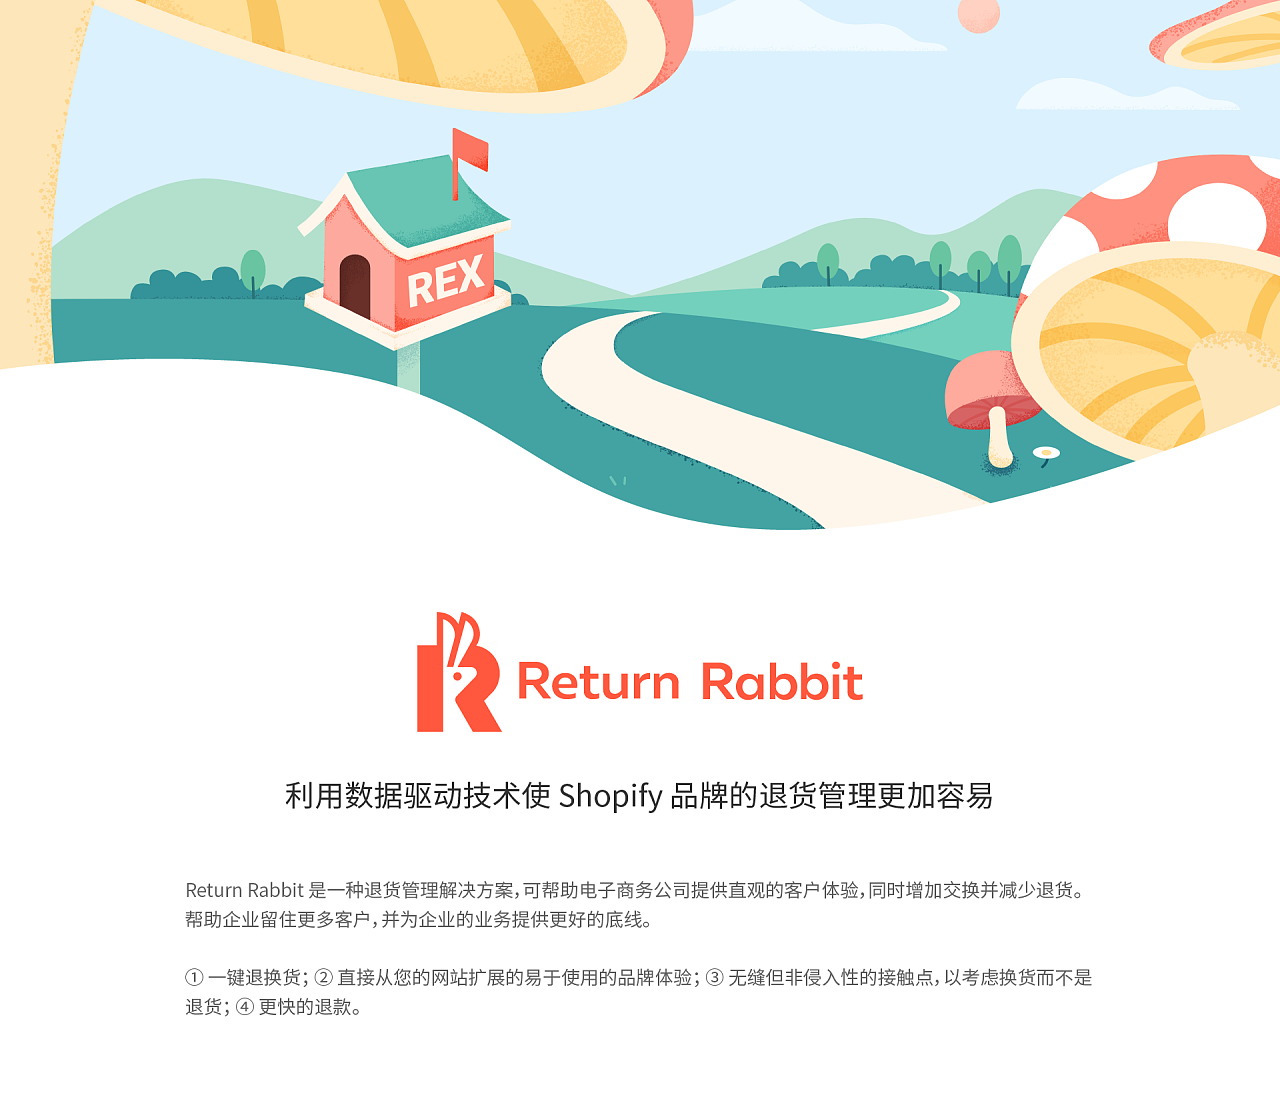 Return Rabbit品牌插画